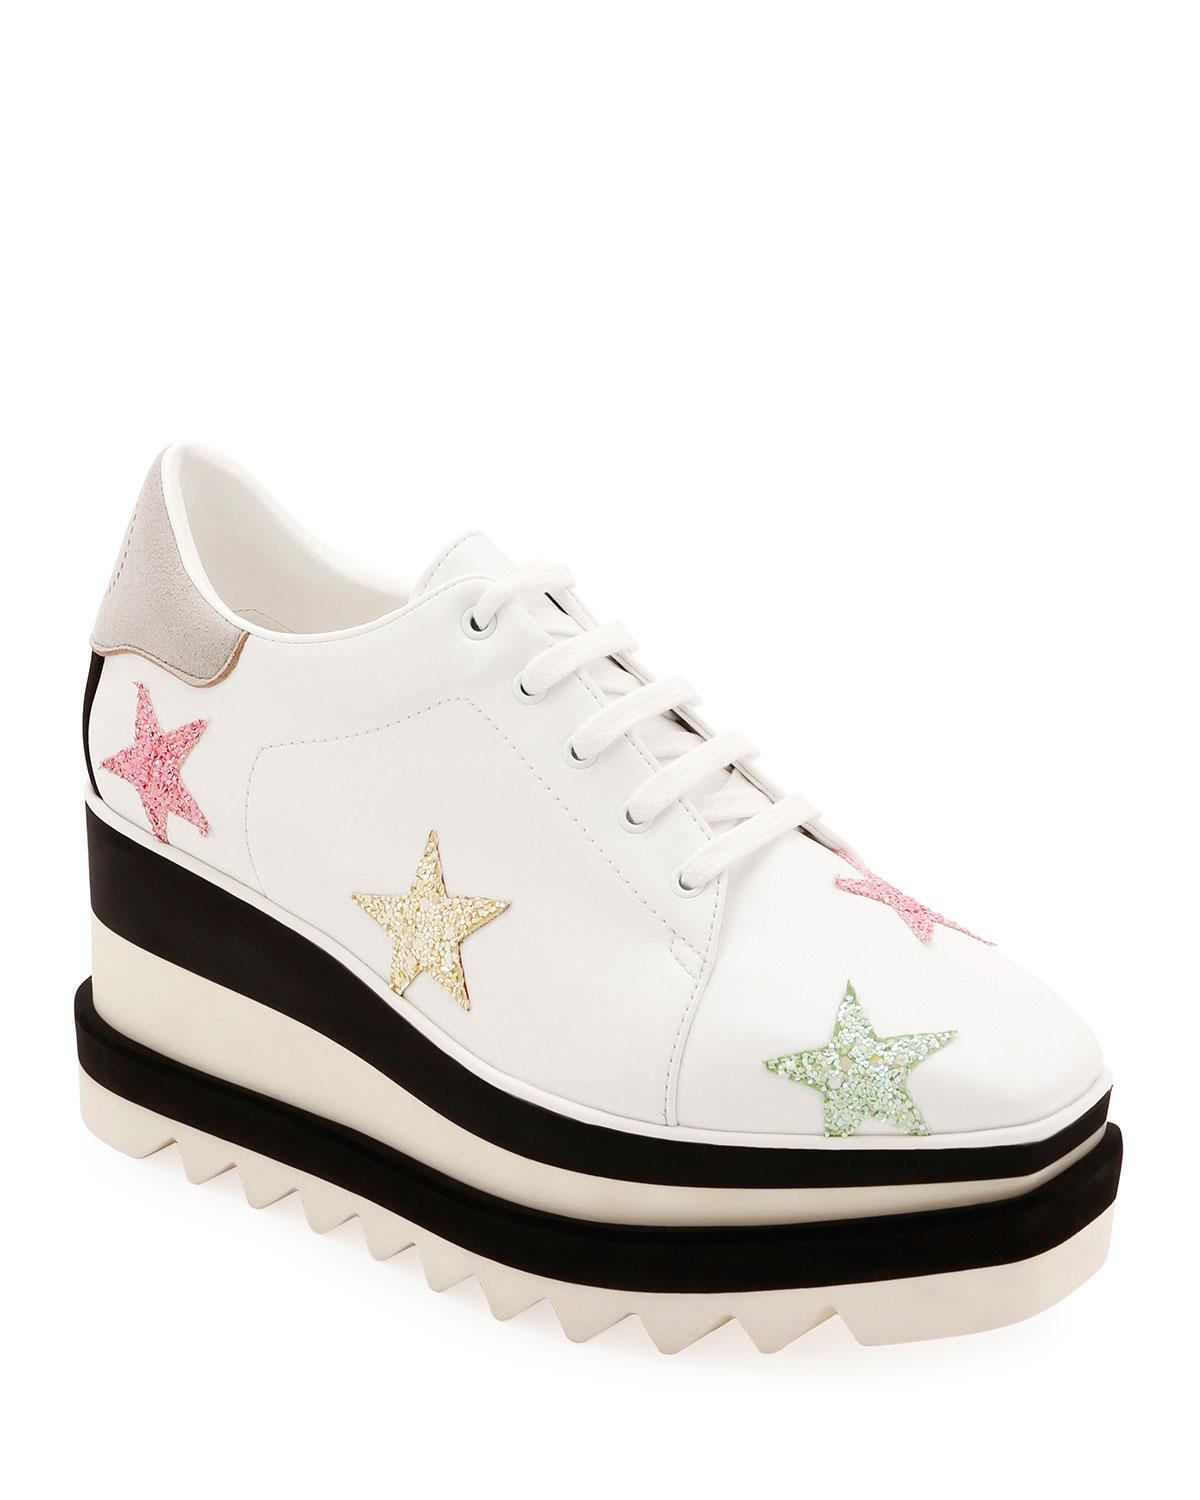 Stella McCartney Elyse Stars Glitter Platform Sneakers in White - Lyst